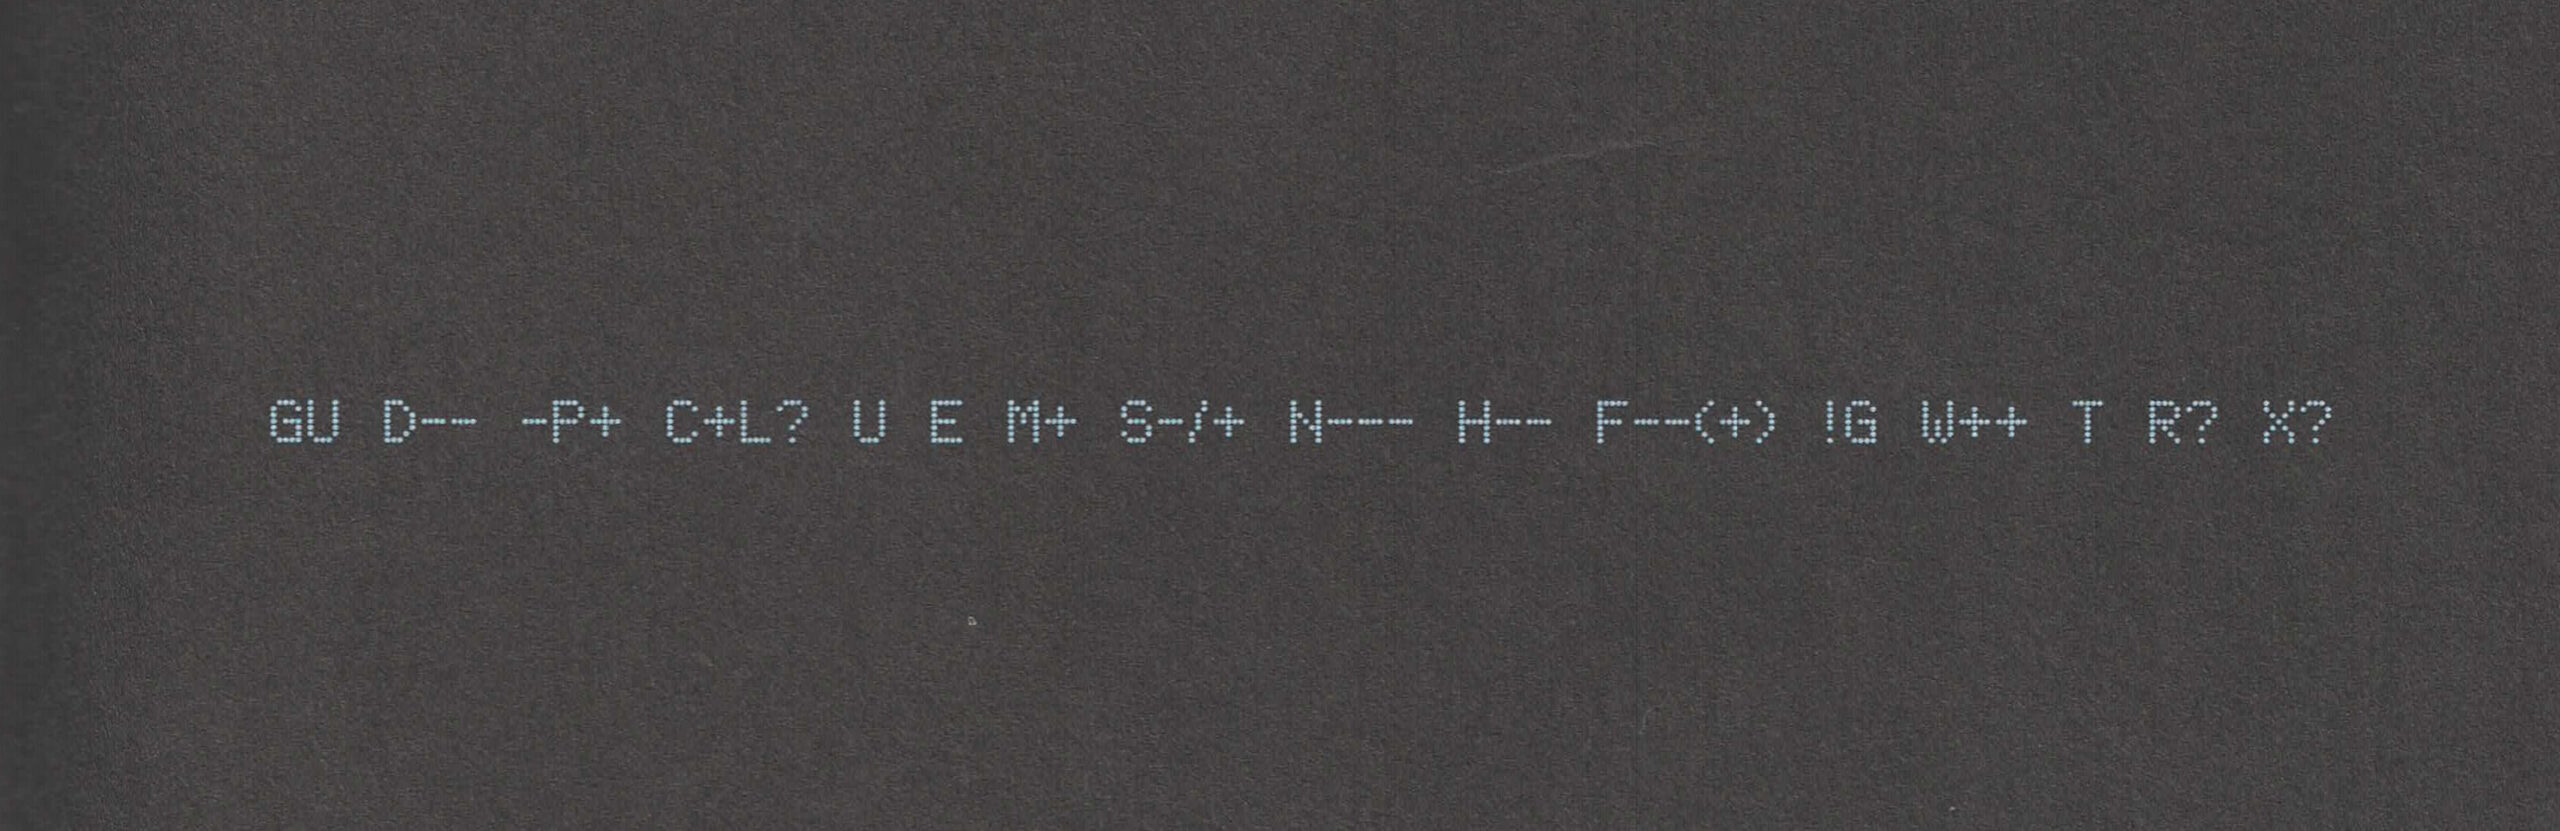 A "Geek Code Block", printed in a dot-matrix style font, light-blue on black, reads: GU D-- -P+ C+L? U E M+ S-/+ N--- H-- F--(+) !G W++ T R? X?